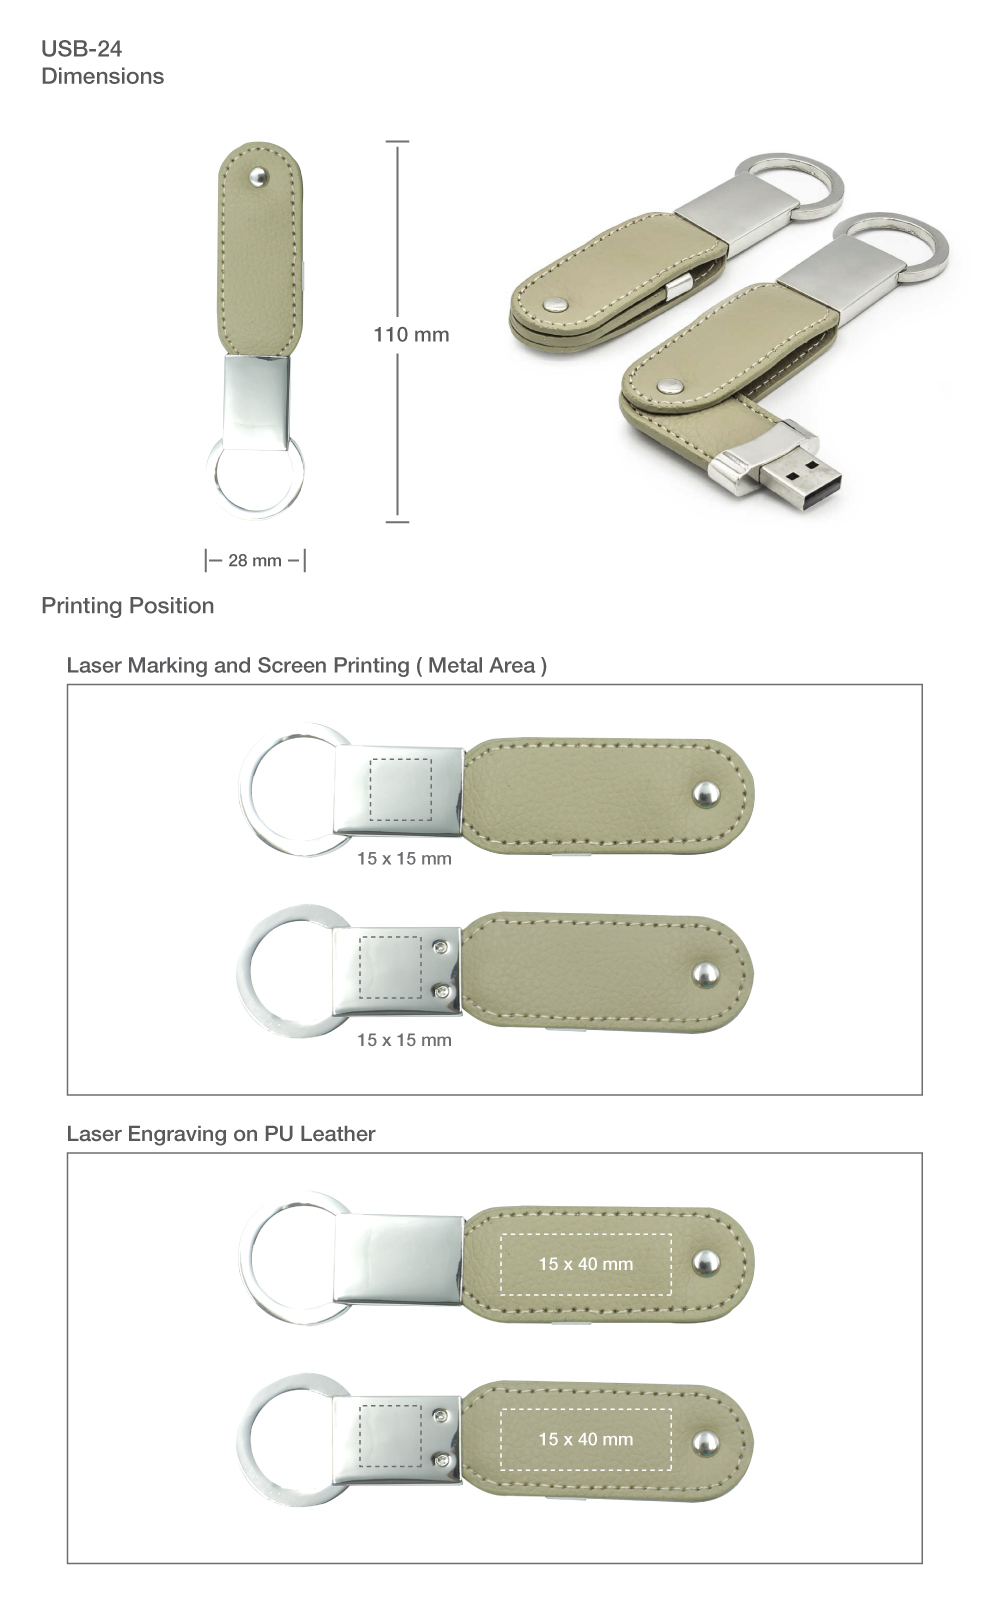 Printing Details on USB